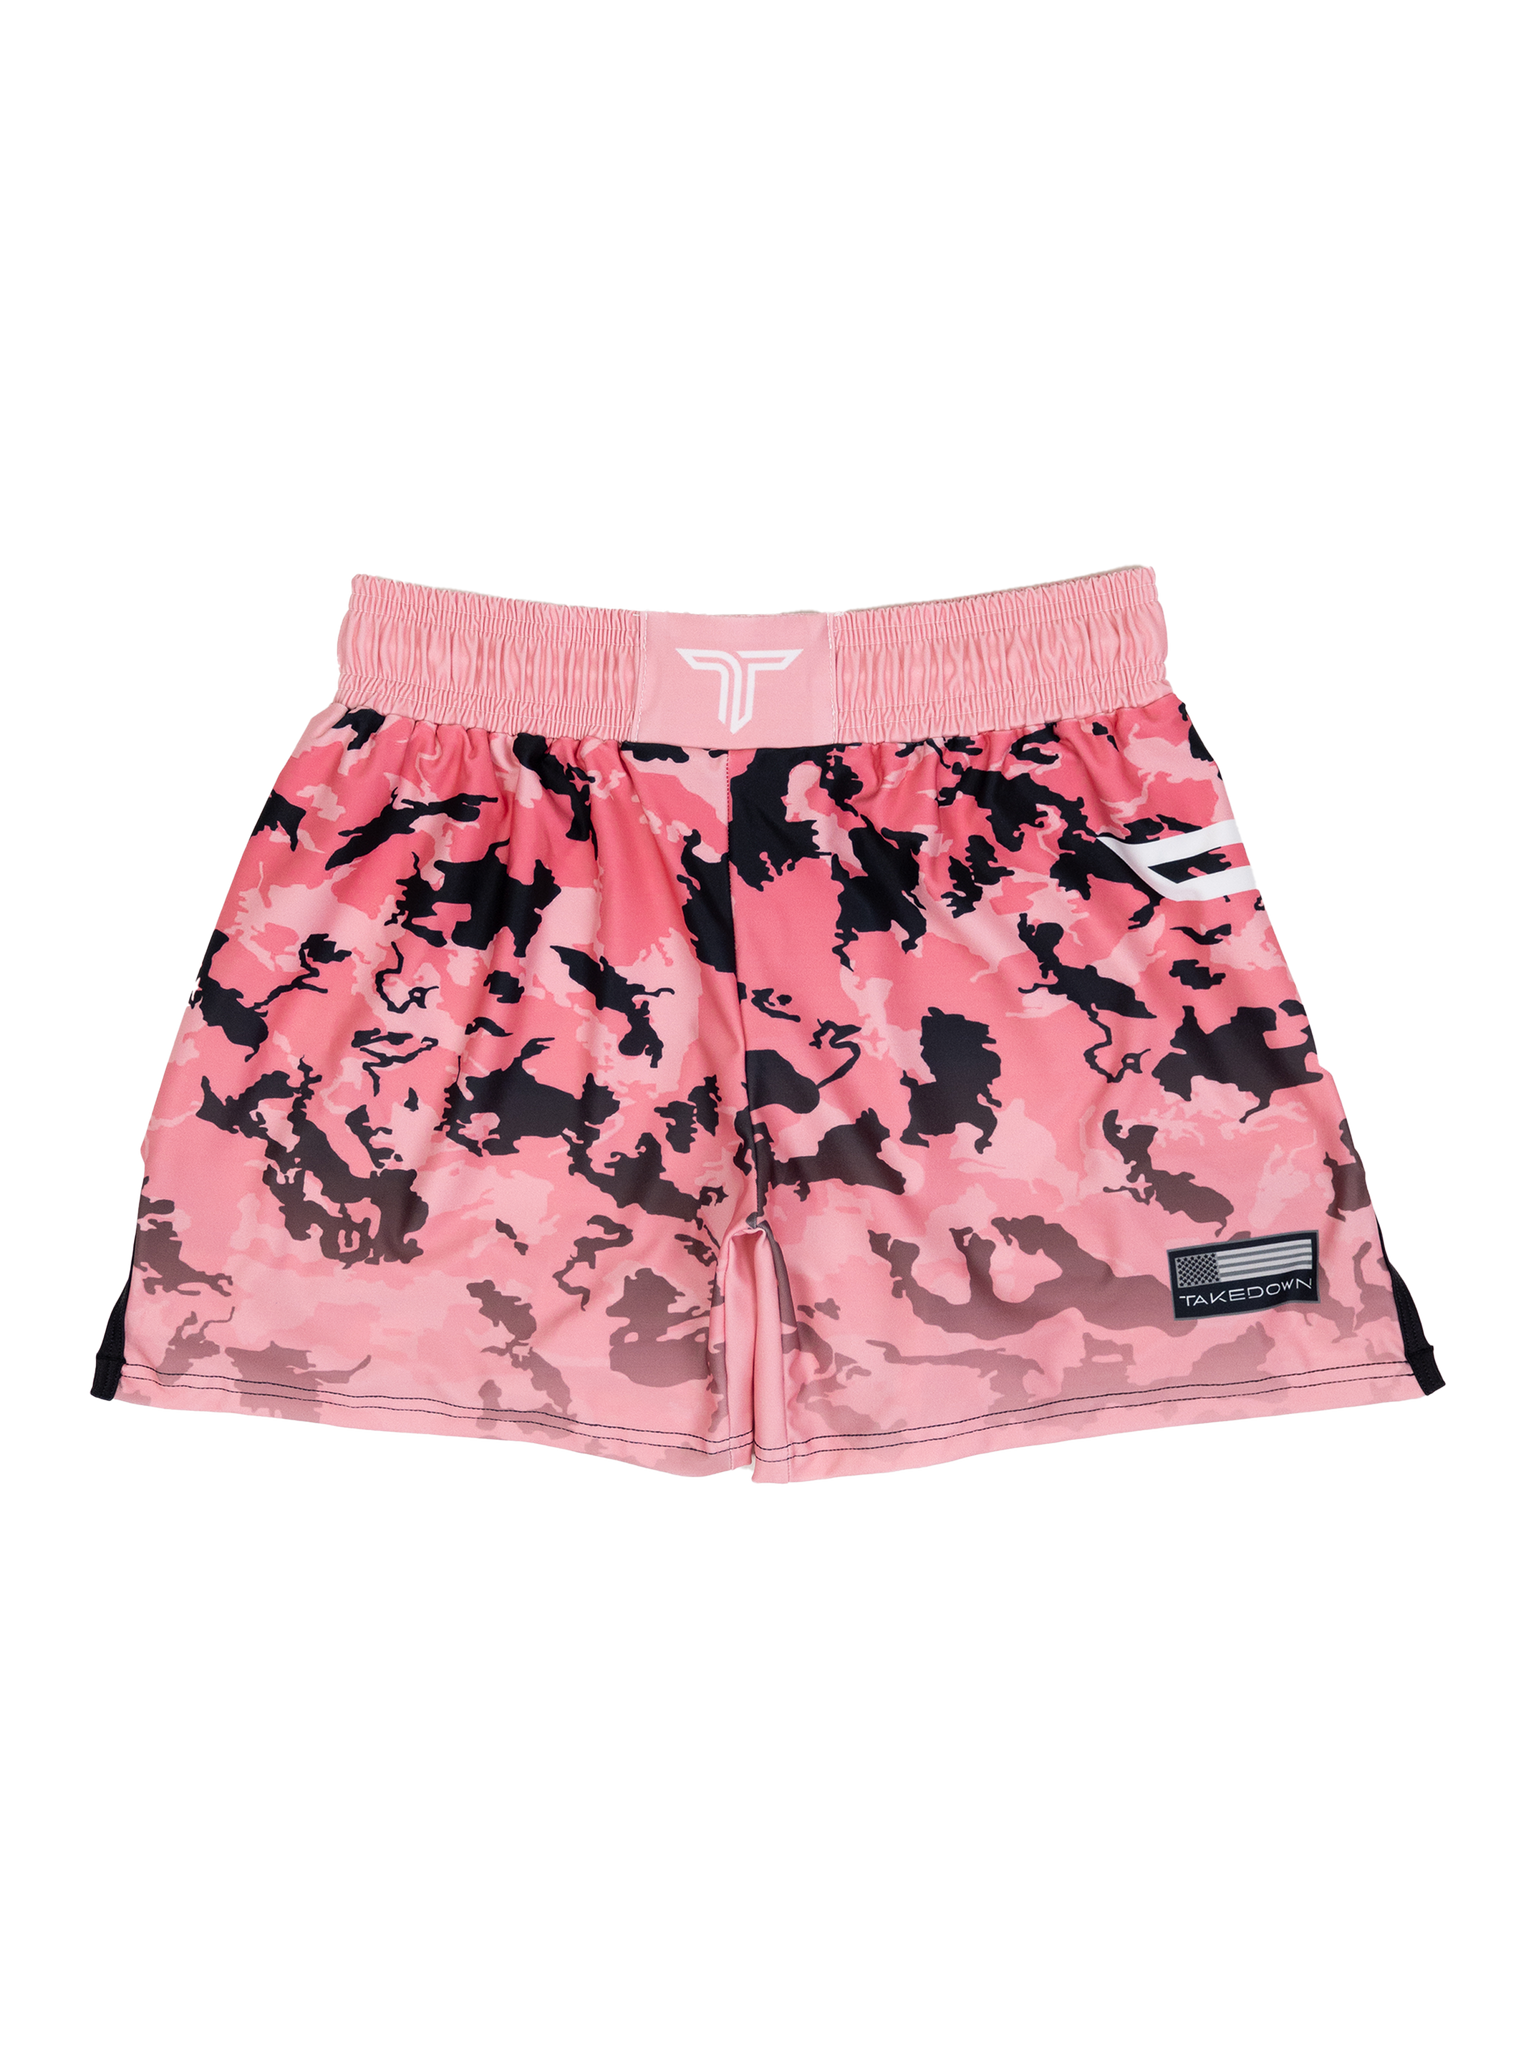 Particle Camo Fight Shorts - Malibu Pink (5"&7" Inseam)